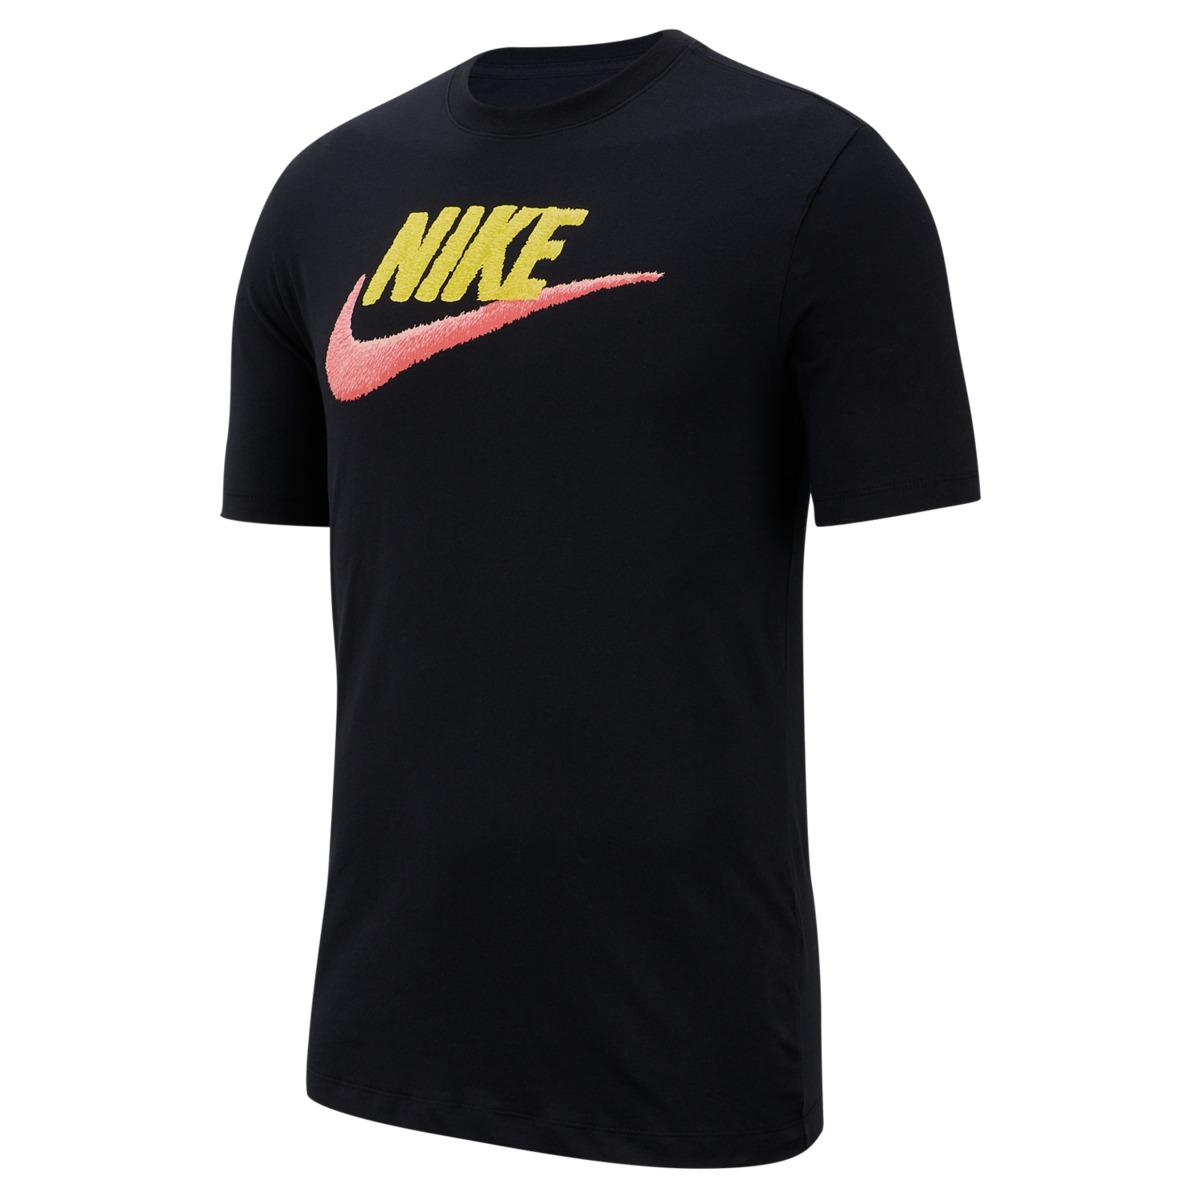 Nike Cotton Sportswear T-shirt in Black / Yellow (Black) for Men - Lyst